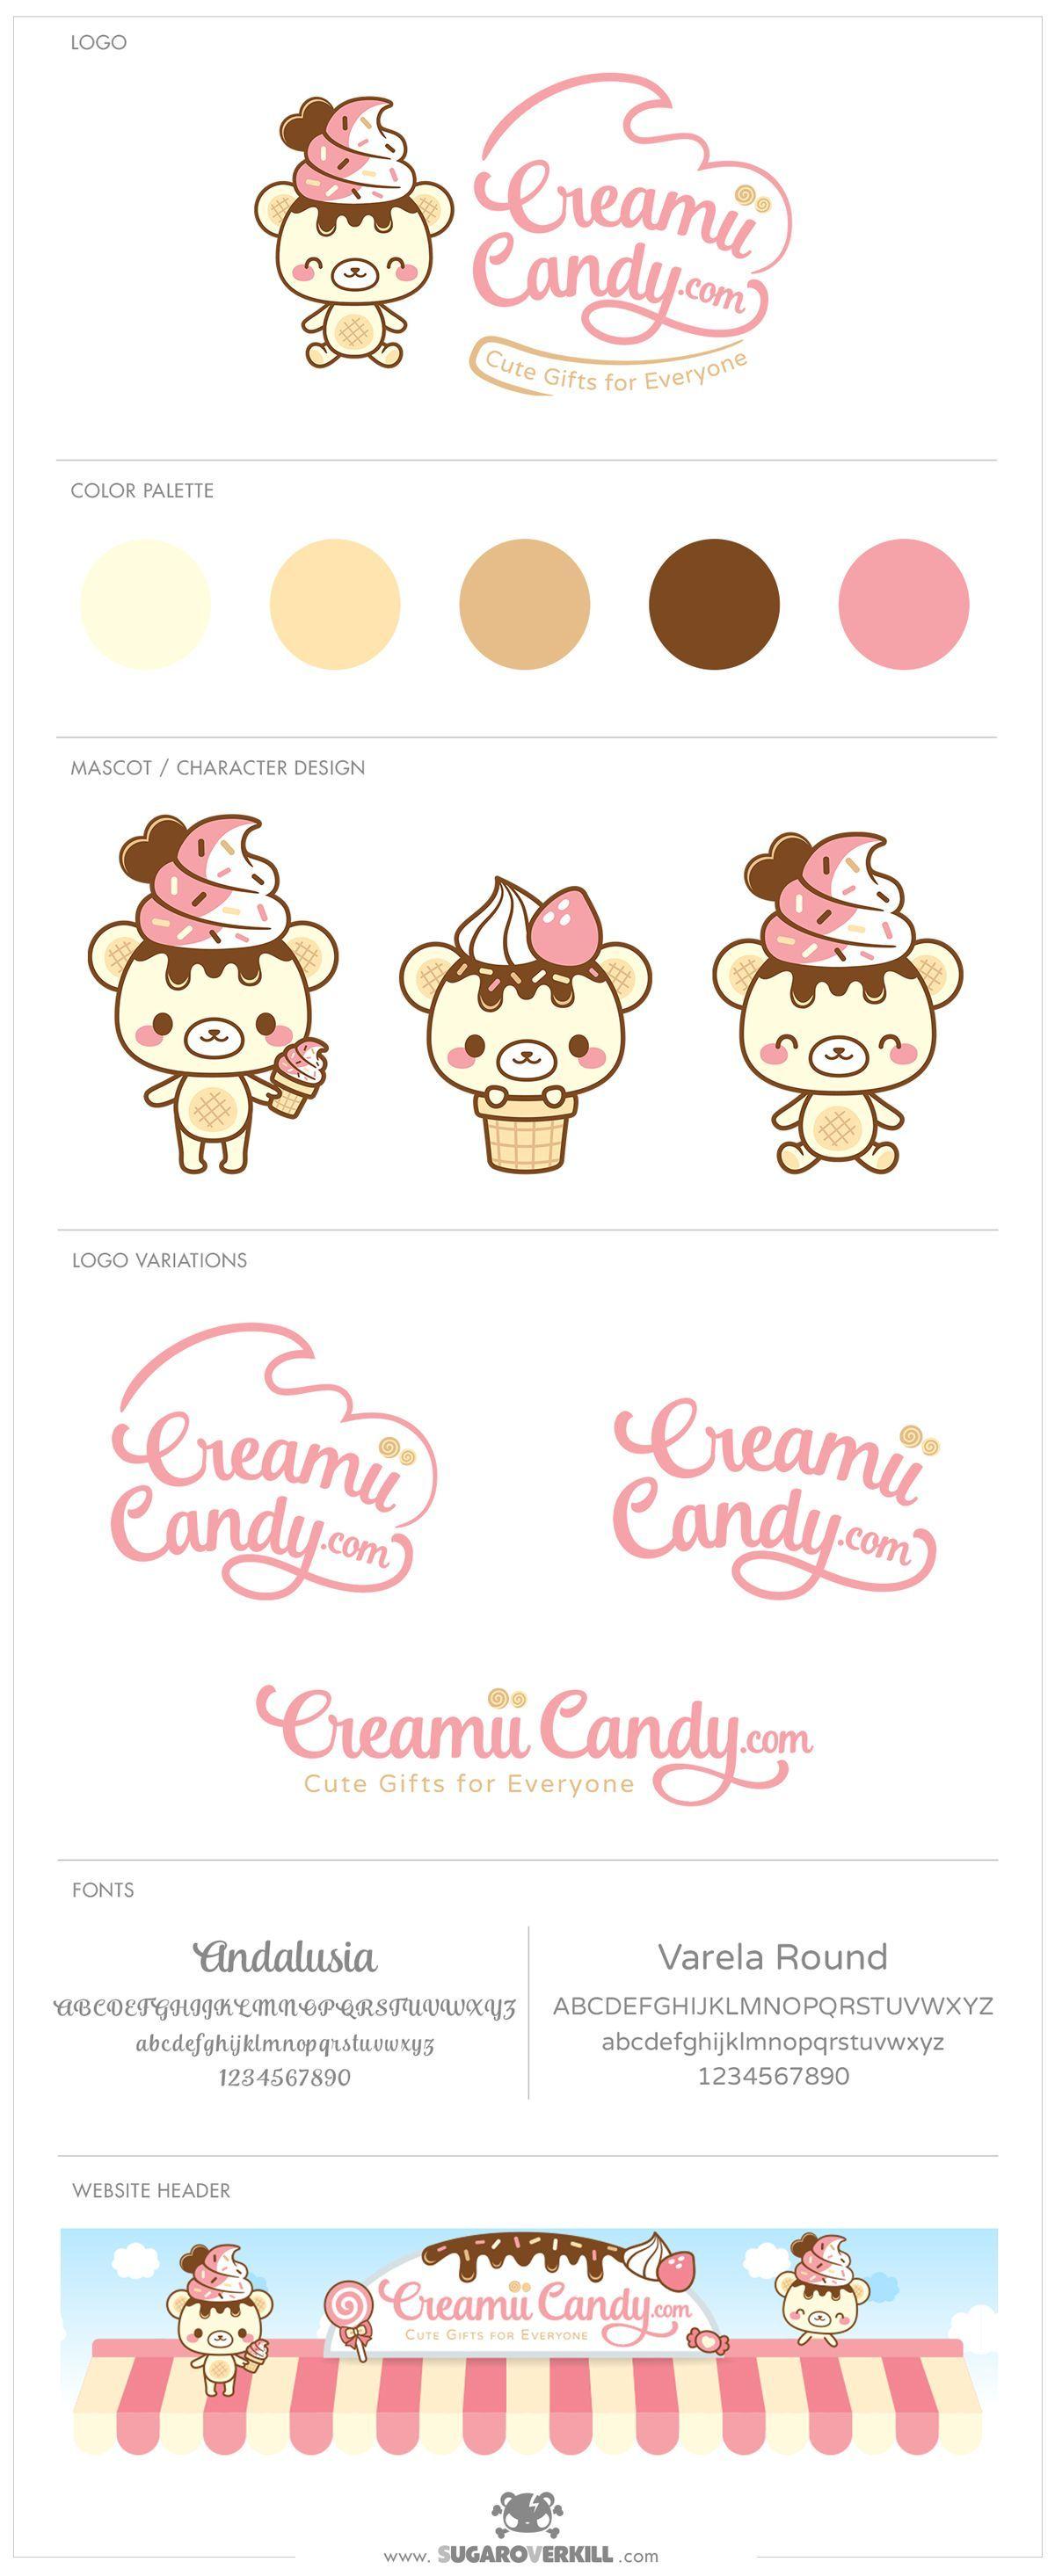 Kawii Logo - A Kawaii Logo and Character Design for Creamii Candy